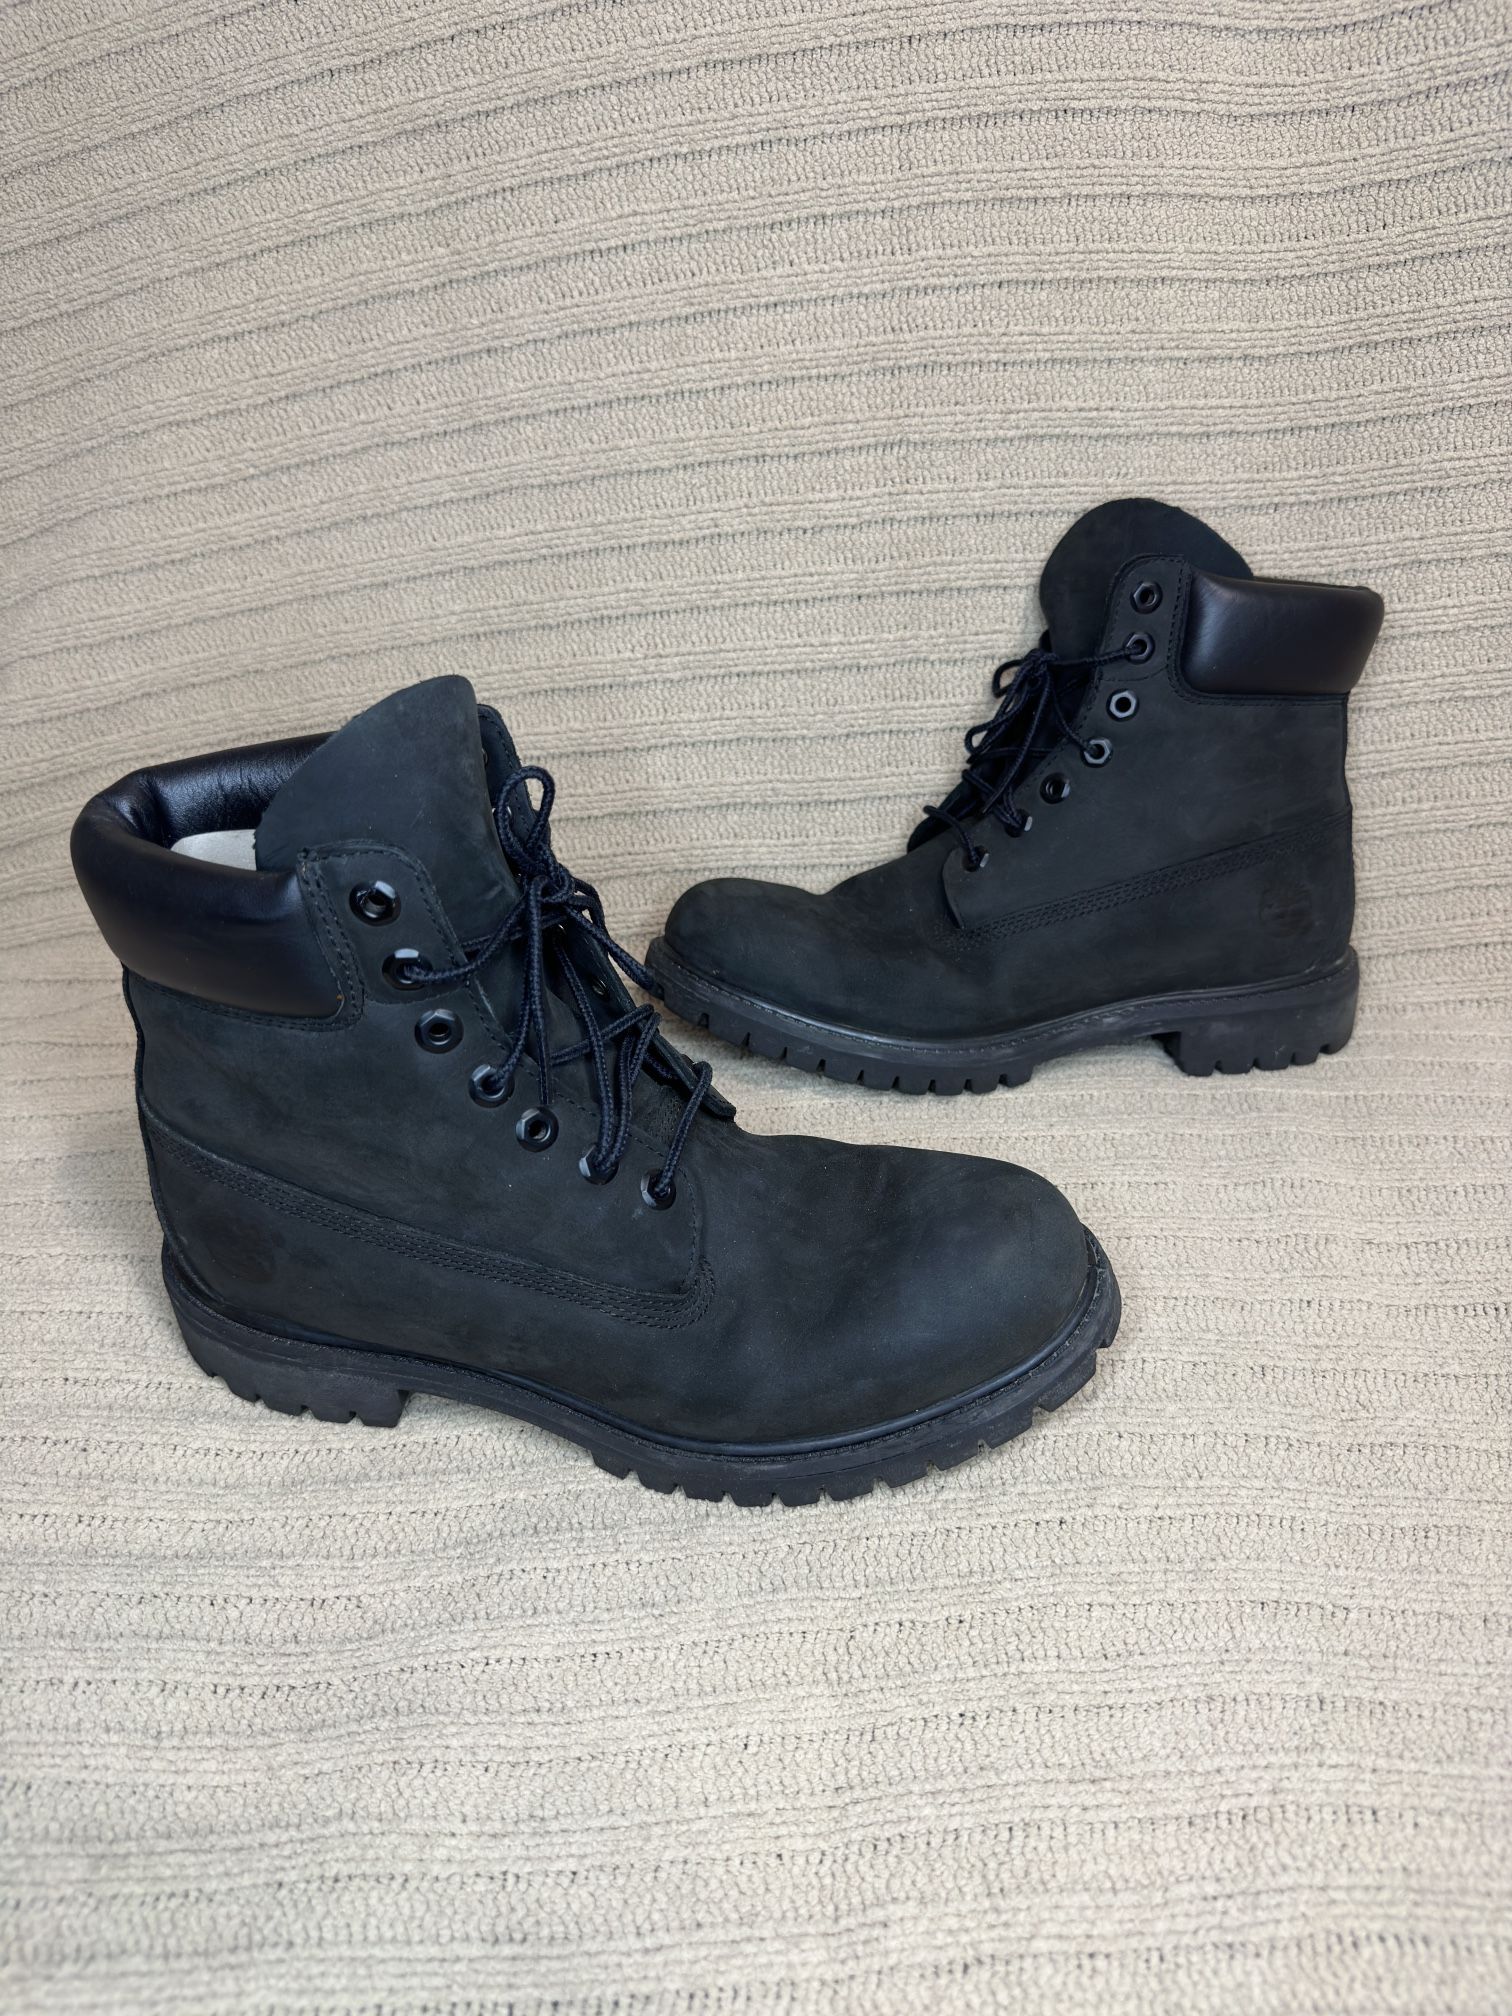 Timberland 6 inch Premium Boot Waterproof Steel Toe Men Size 9.5 BLACK 